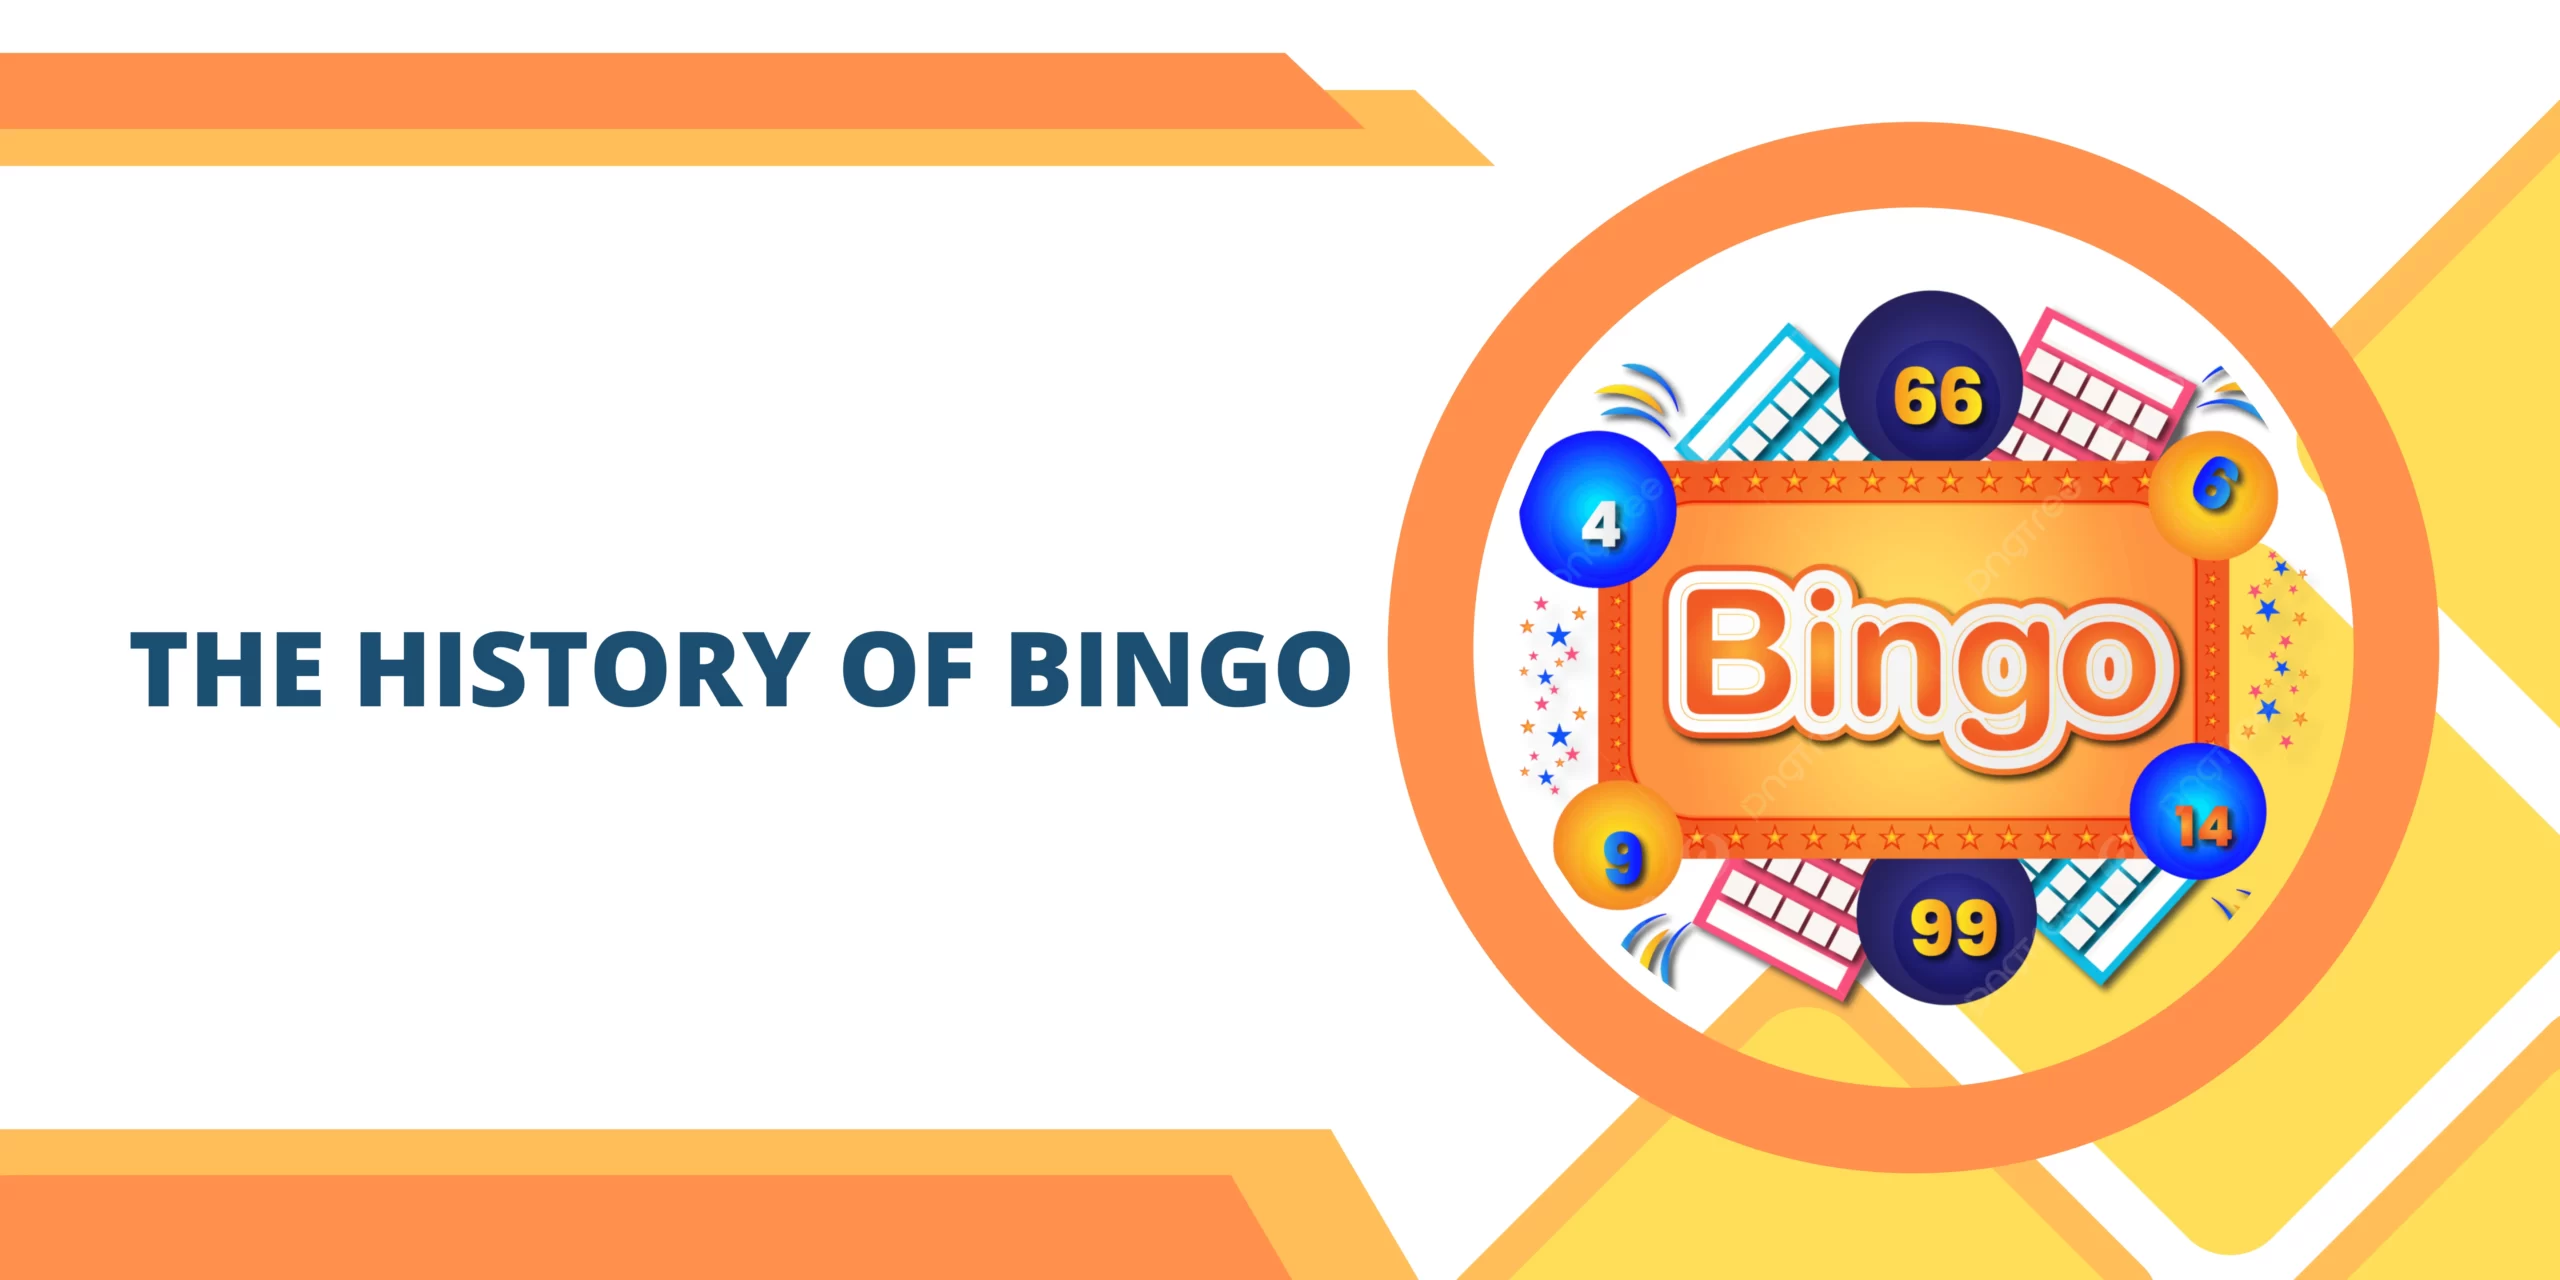 The History of Bingo